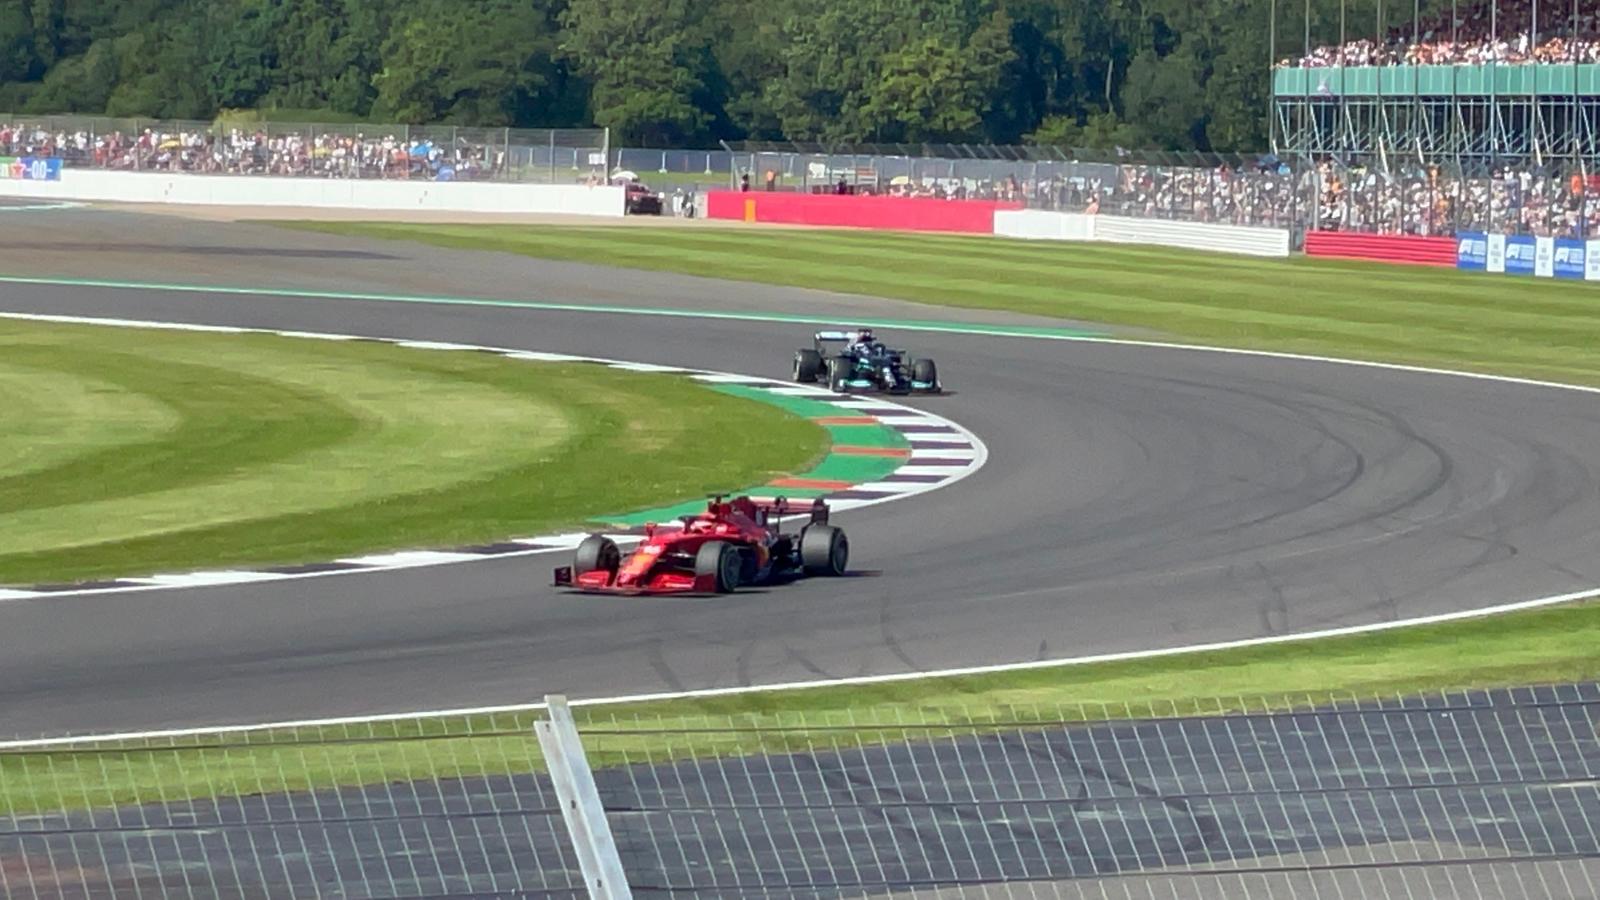 Leclerc on lead until the last two laps